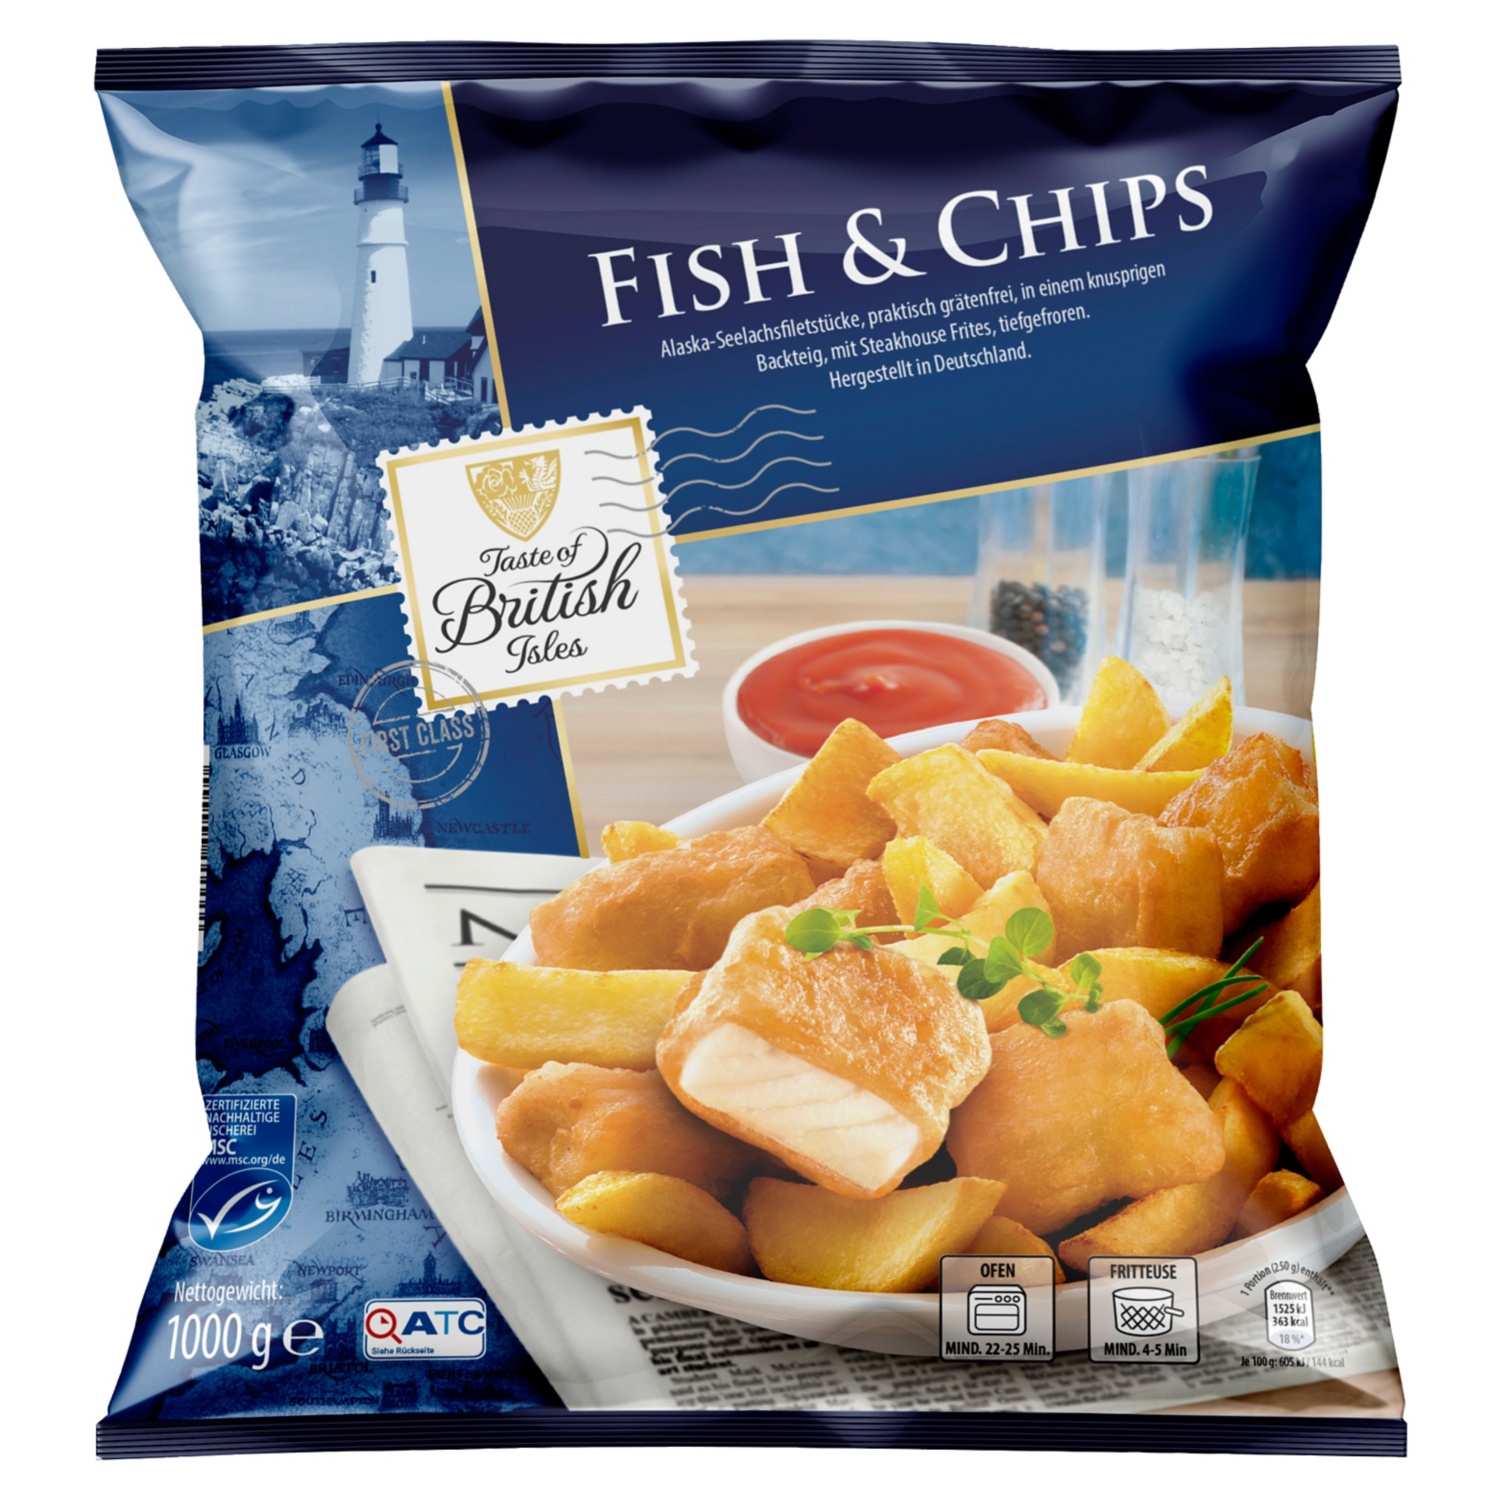 Taste of British Isles Fish & Chips 1 kg